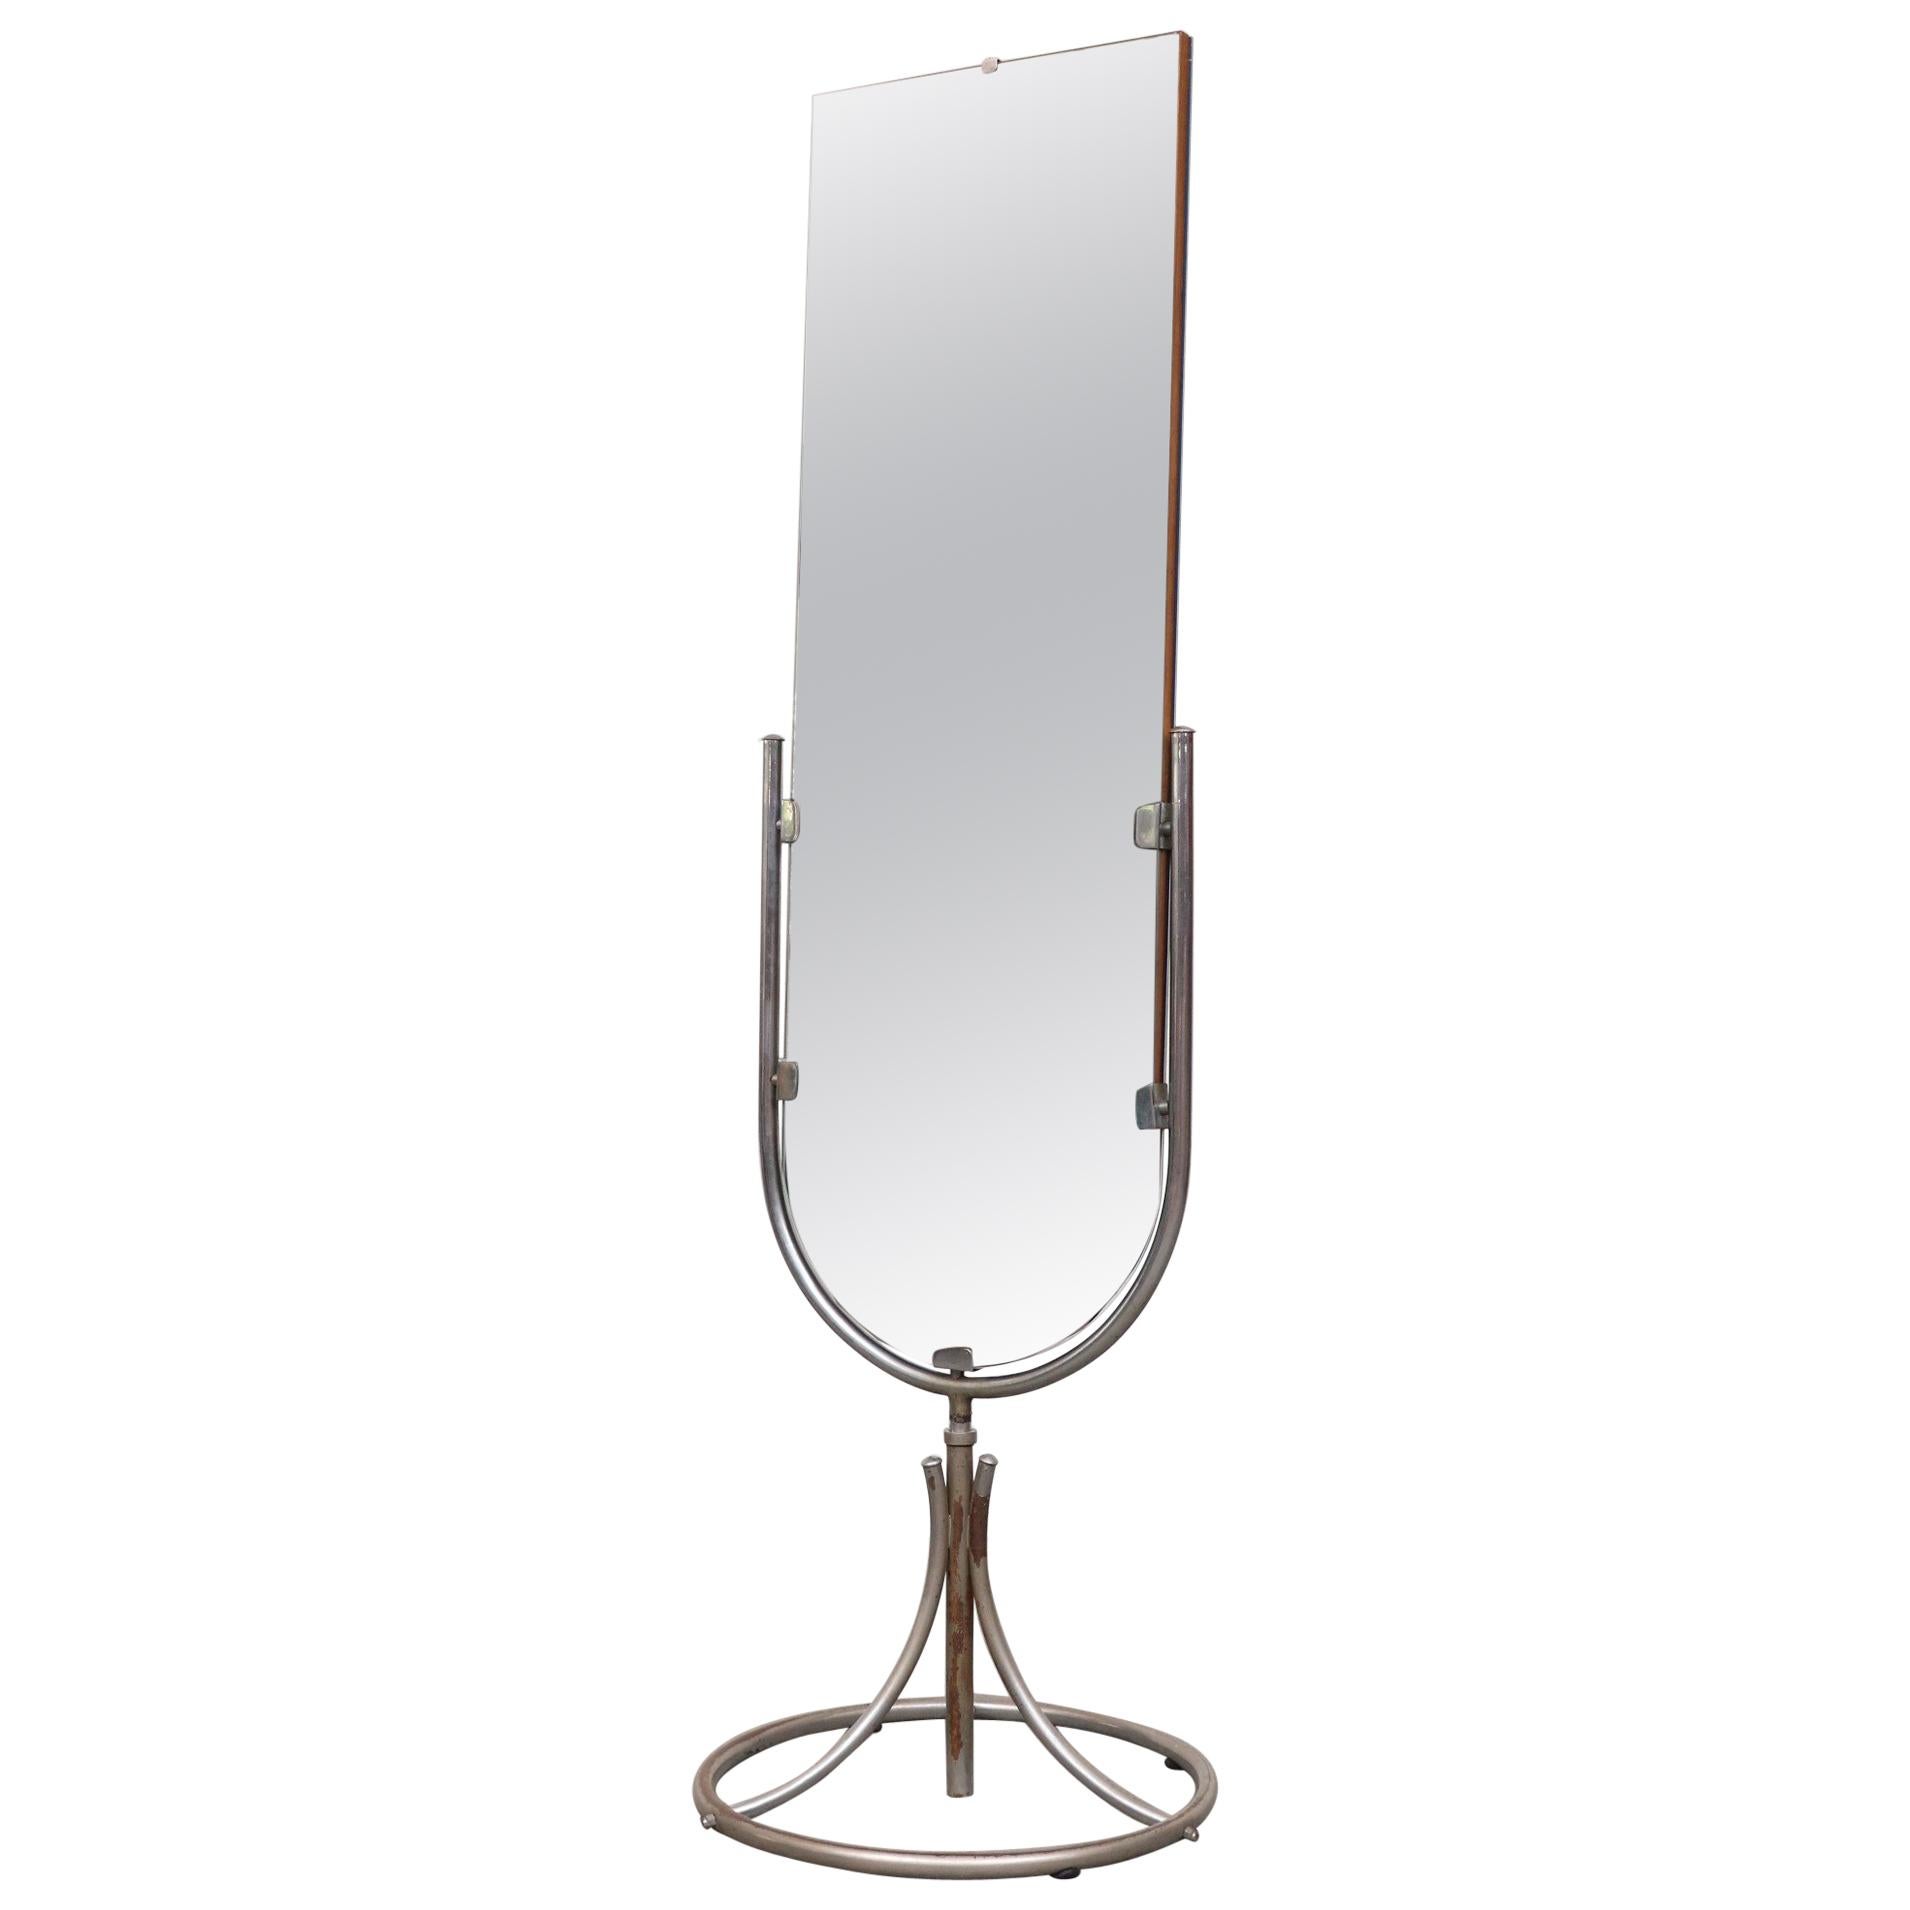 Bauhaus Chrome-Plated Swivel Standing Mirror with Circular Base